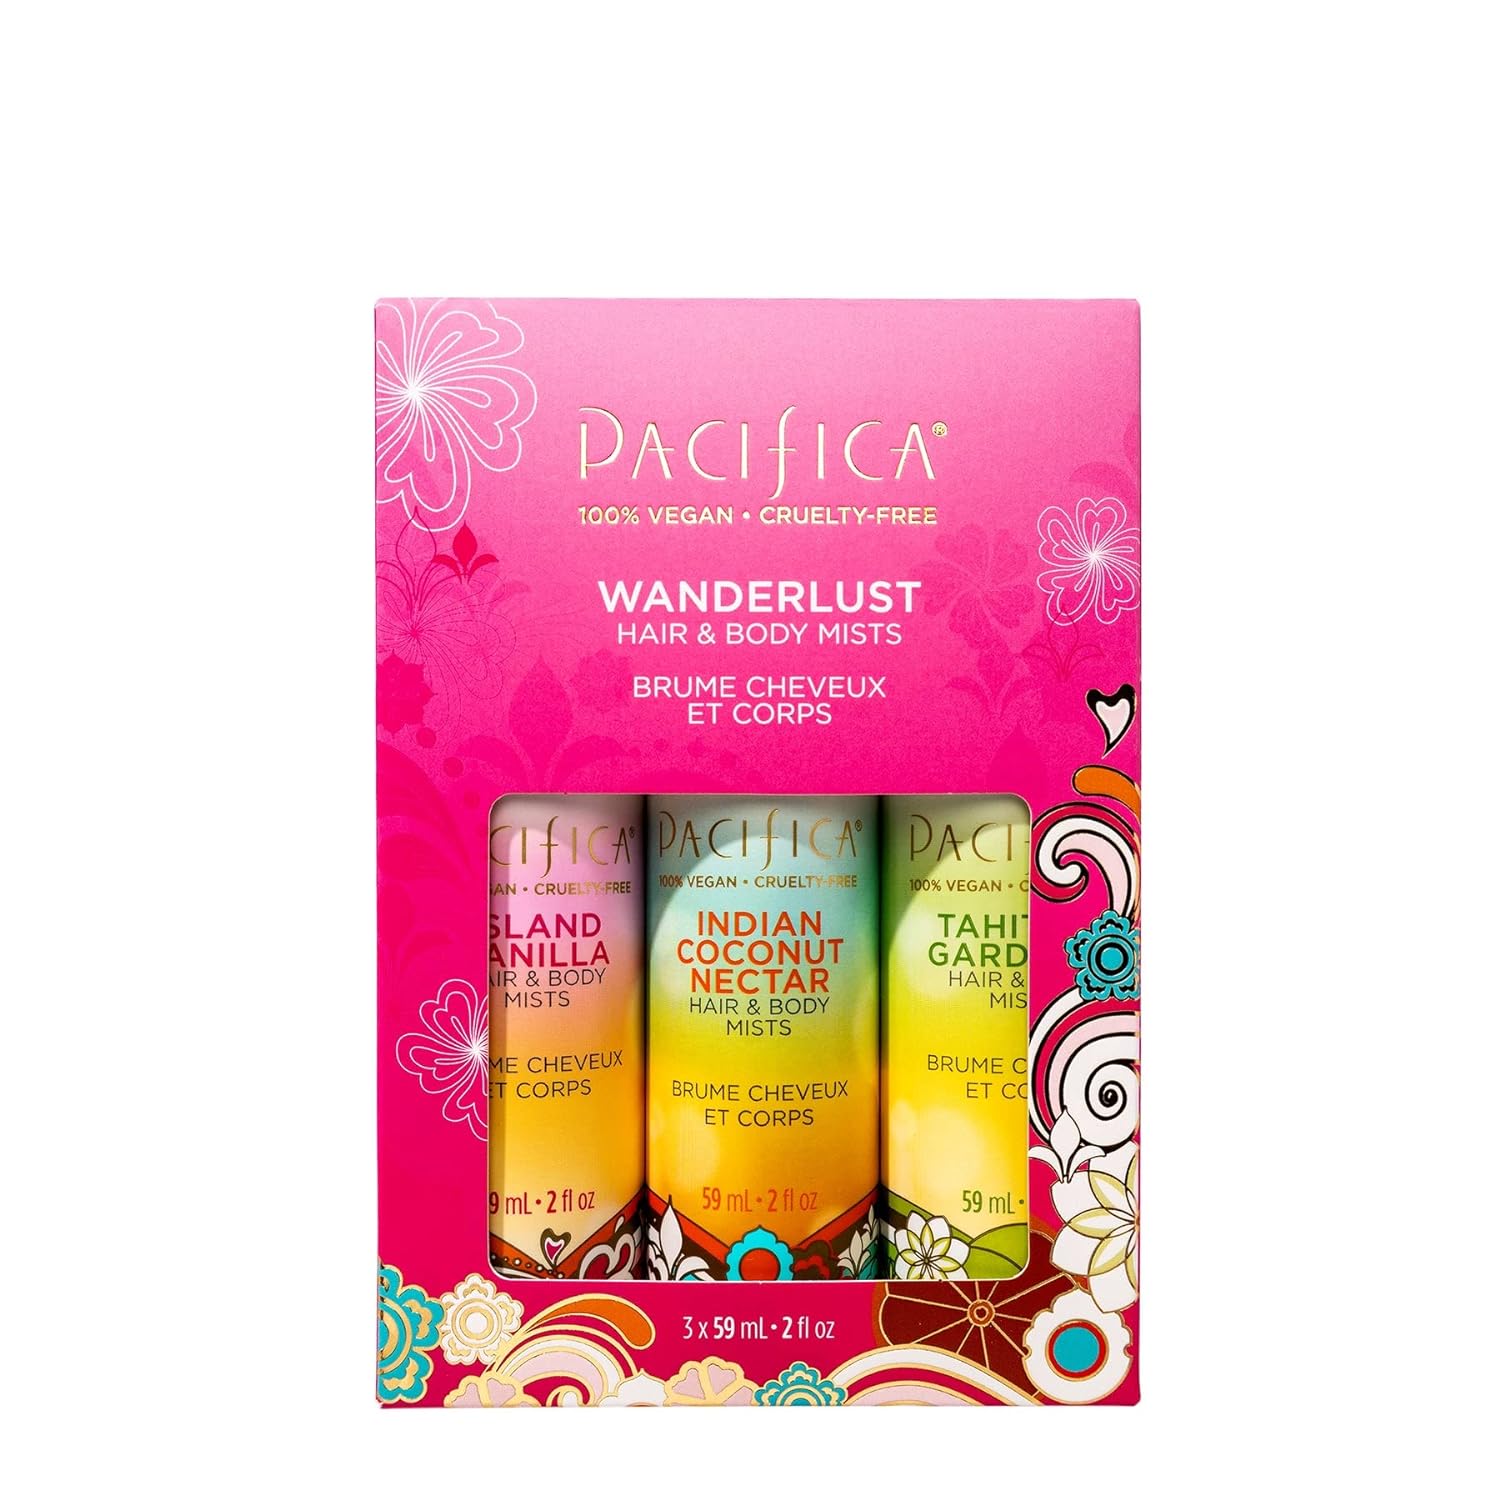 Pacifica Beauty Mini Fragrance Sampler, 3 Island Vanilla Scents - Hair Perfume & Body Spray Gift Set, Vegan & Cruelty Free